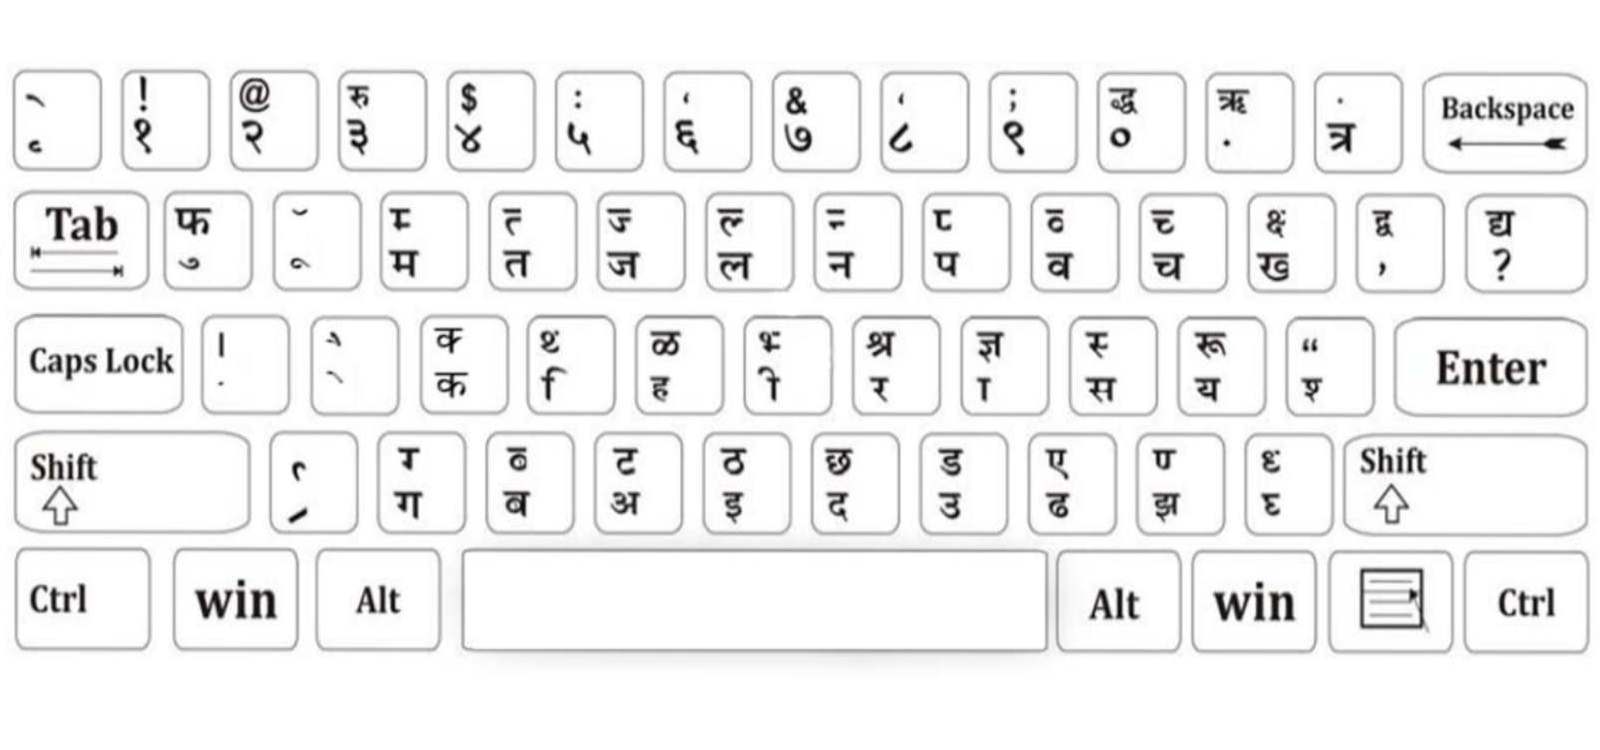 hindi keyboard image